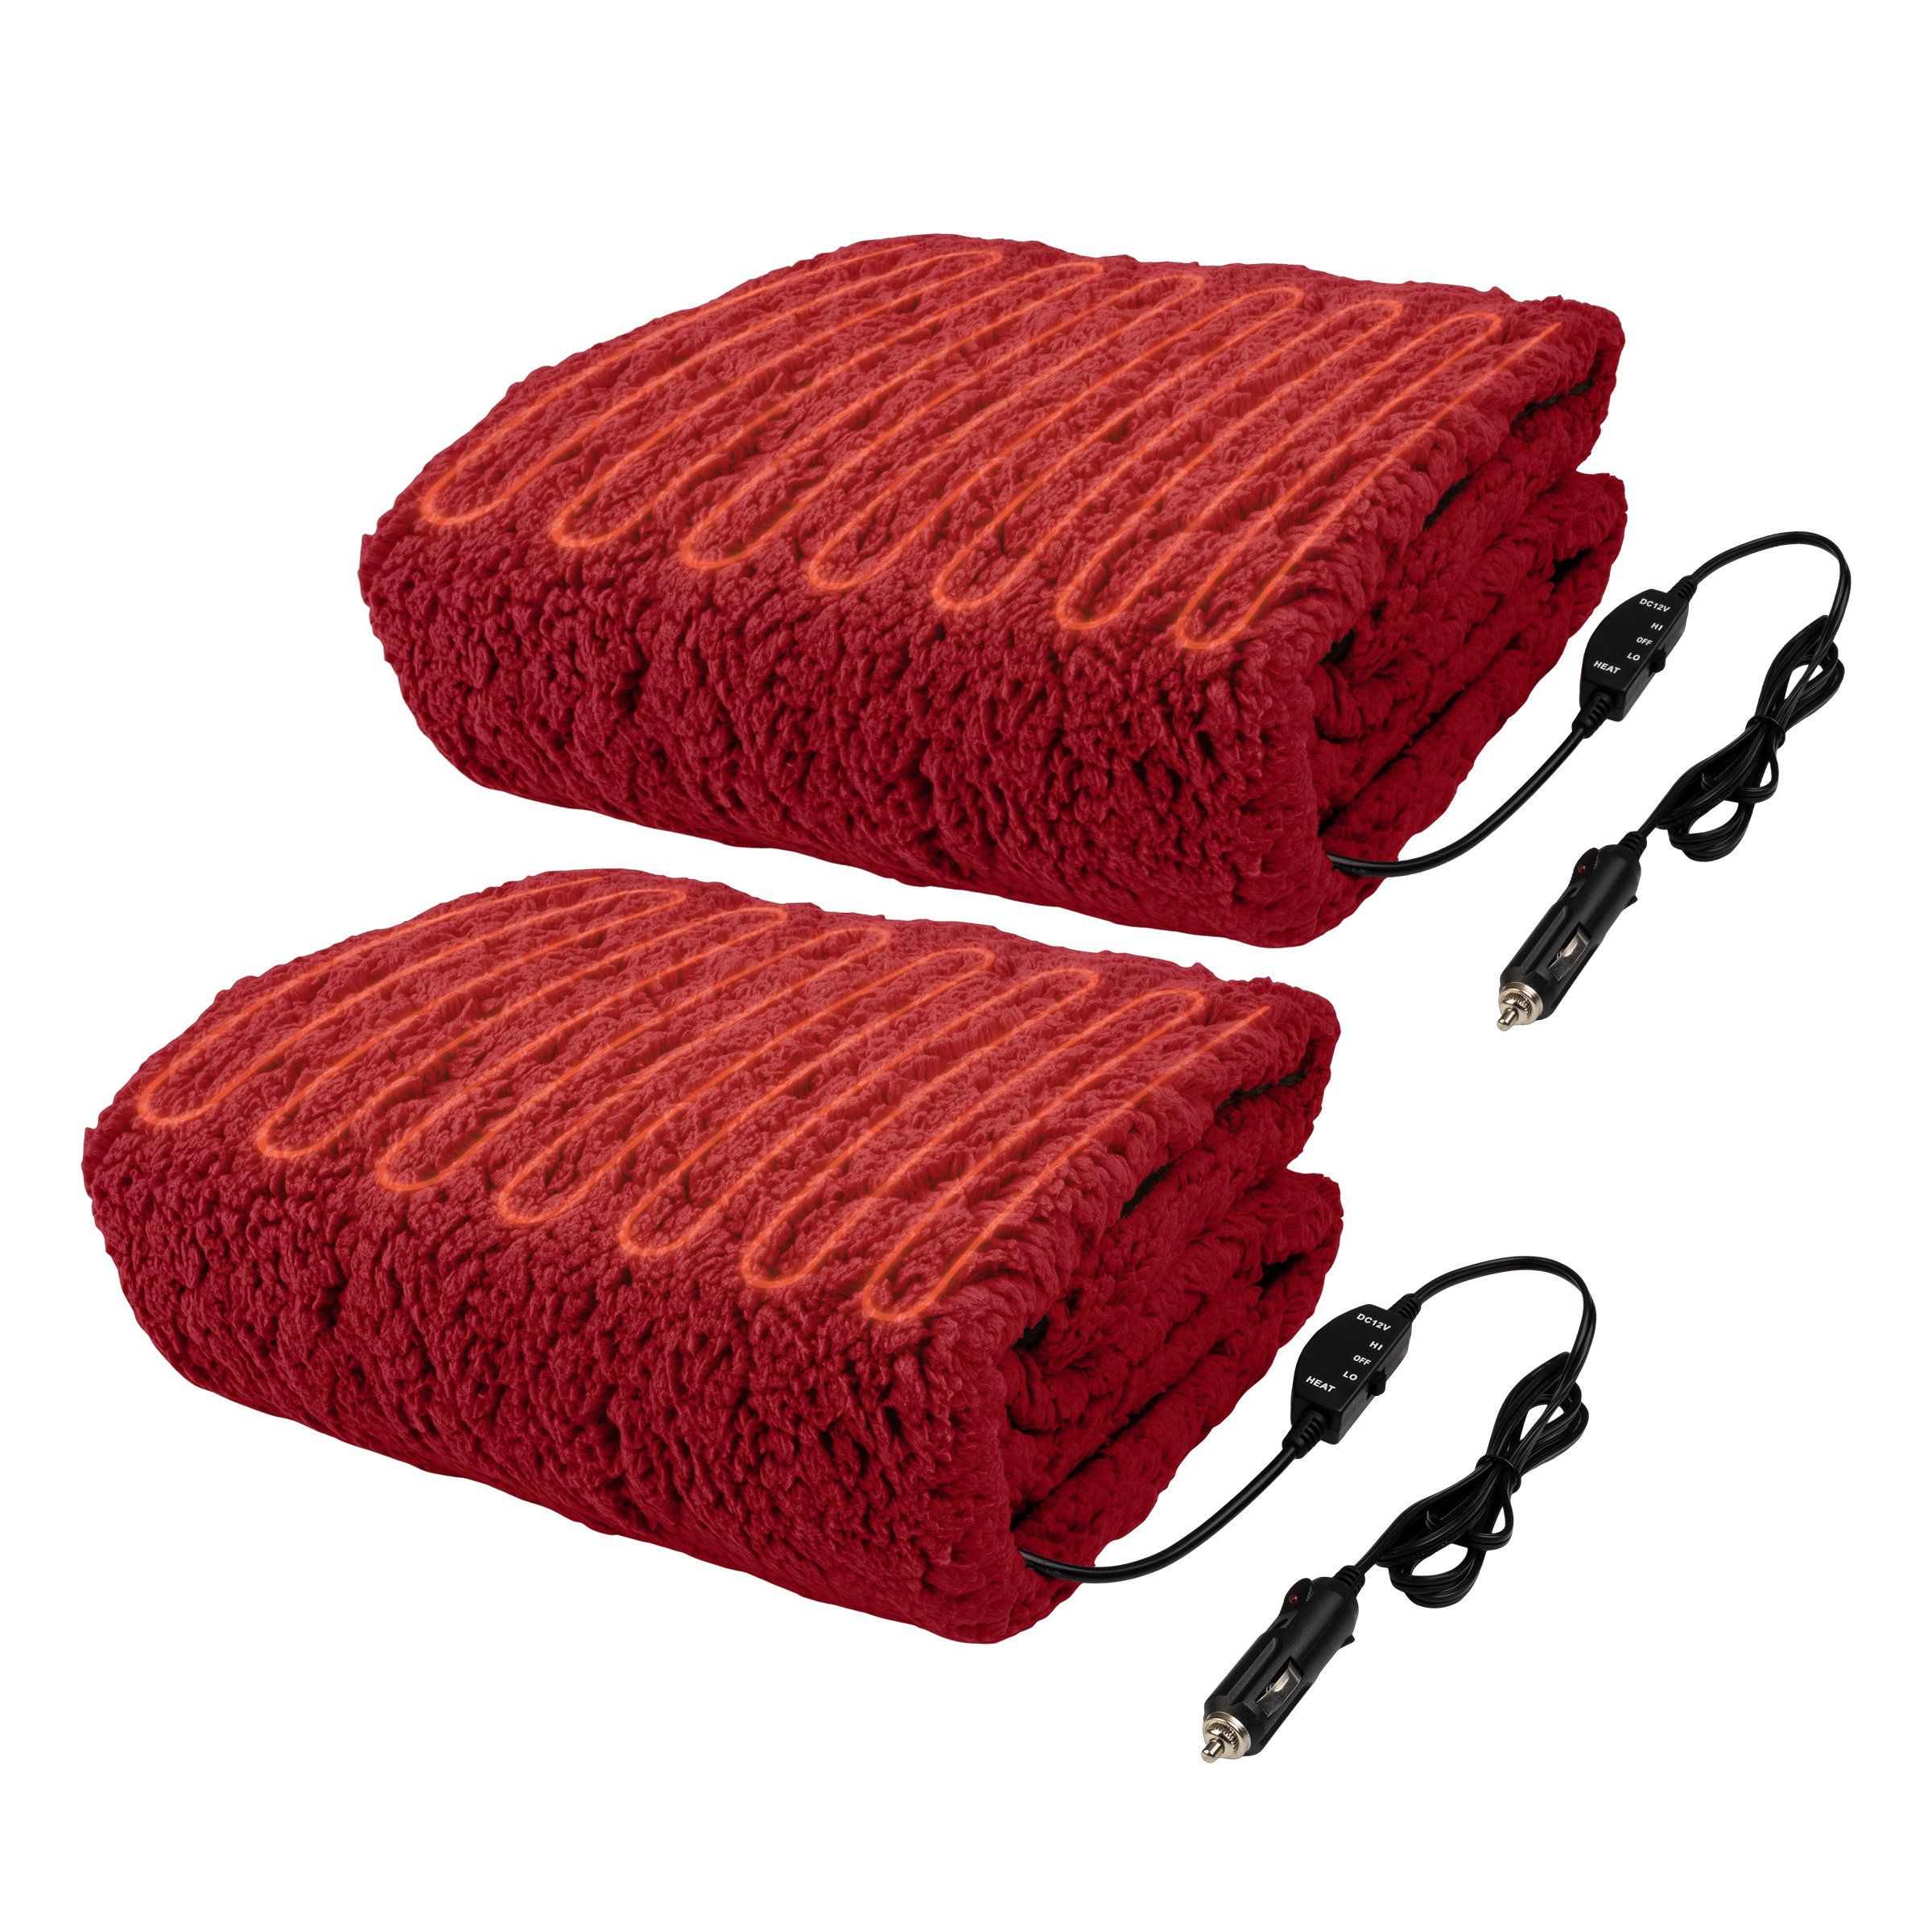 Stalwart 2Pack Heated Blanket Portable 12V Electric Travel Blanket Set for Car Truck RV